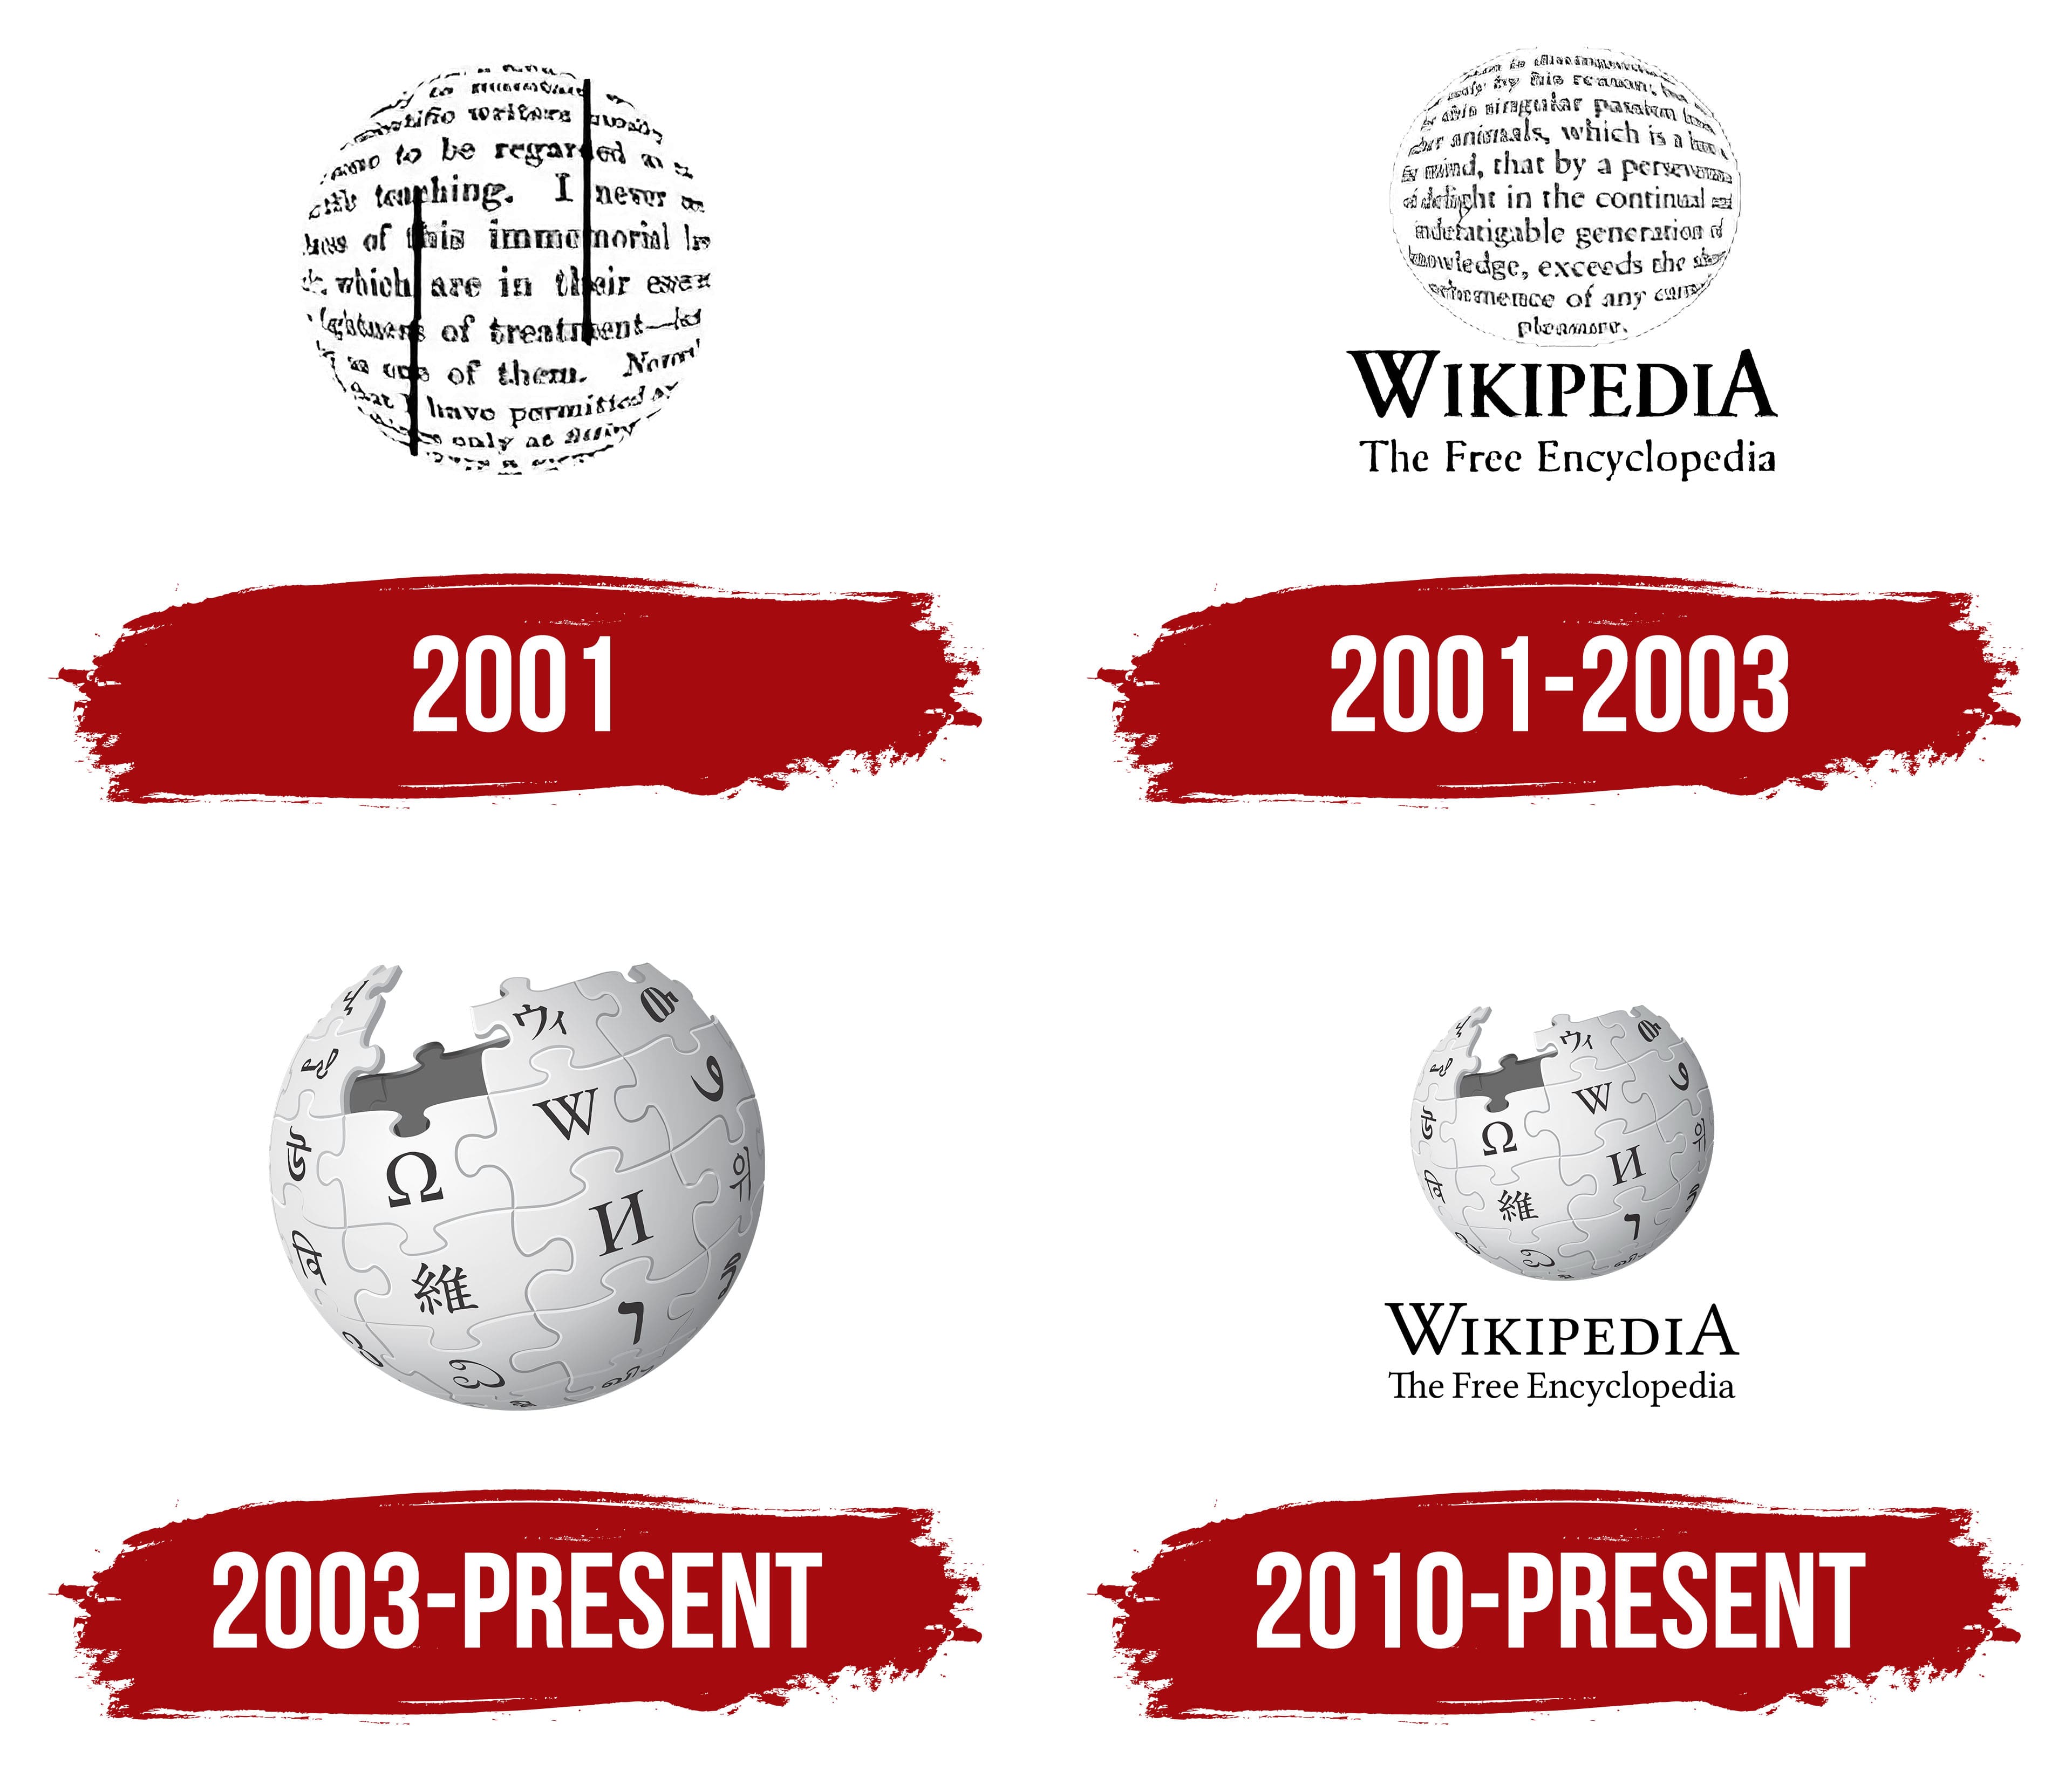 Uitmaken paling Stapel Wikipedia Logo, symbol, meaning, history, PNG, brand